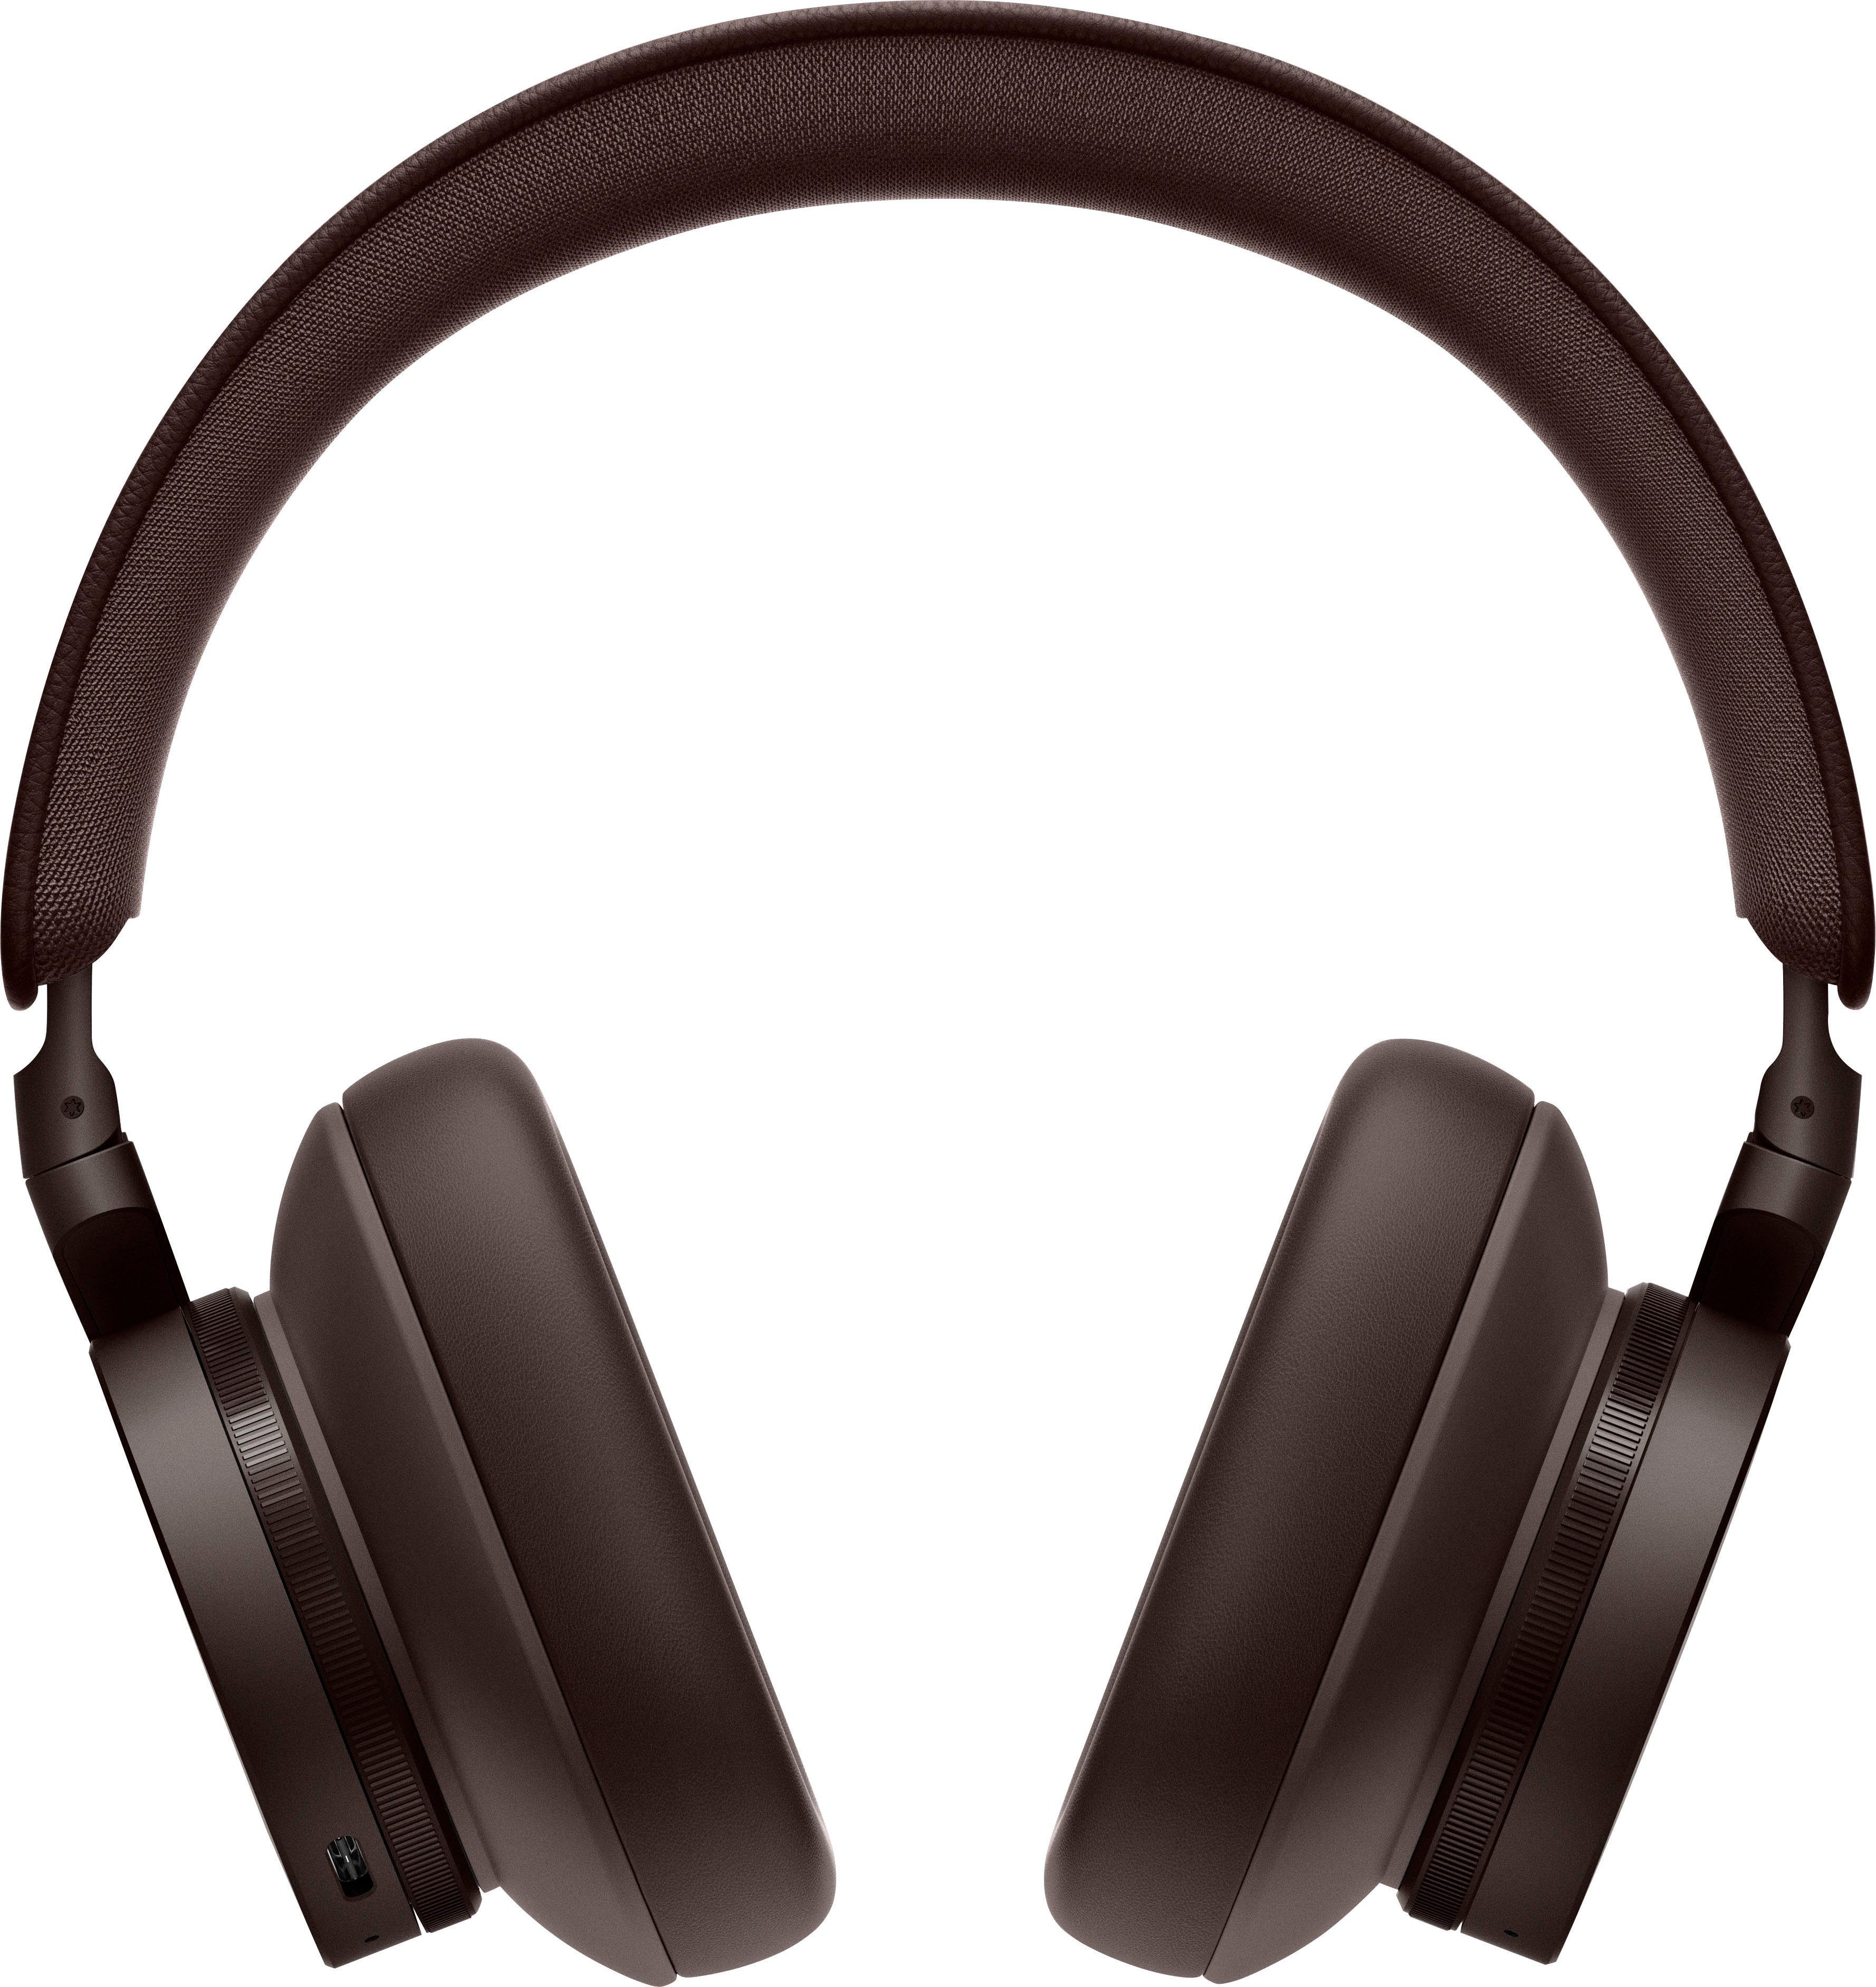 Bang & Ladestandsanzeige, braun Freisprechfunktion, Transparenzmodus, Geräuschisolierung, Olufsen Bluetooth) Over-Ear-Kopfhörer (ANC), Cancelling Sprachsteuerung, Noise Beoplay LED (AN-Funktionen, Active H95